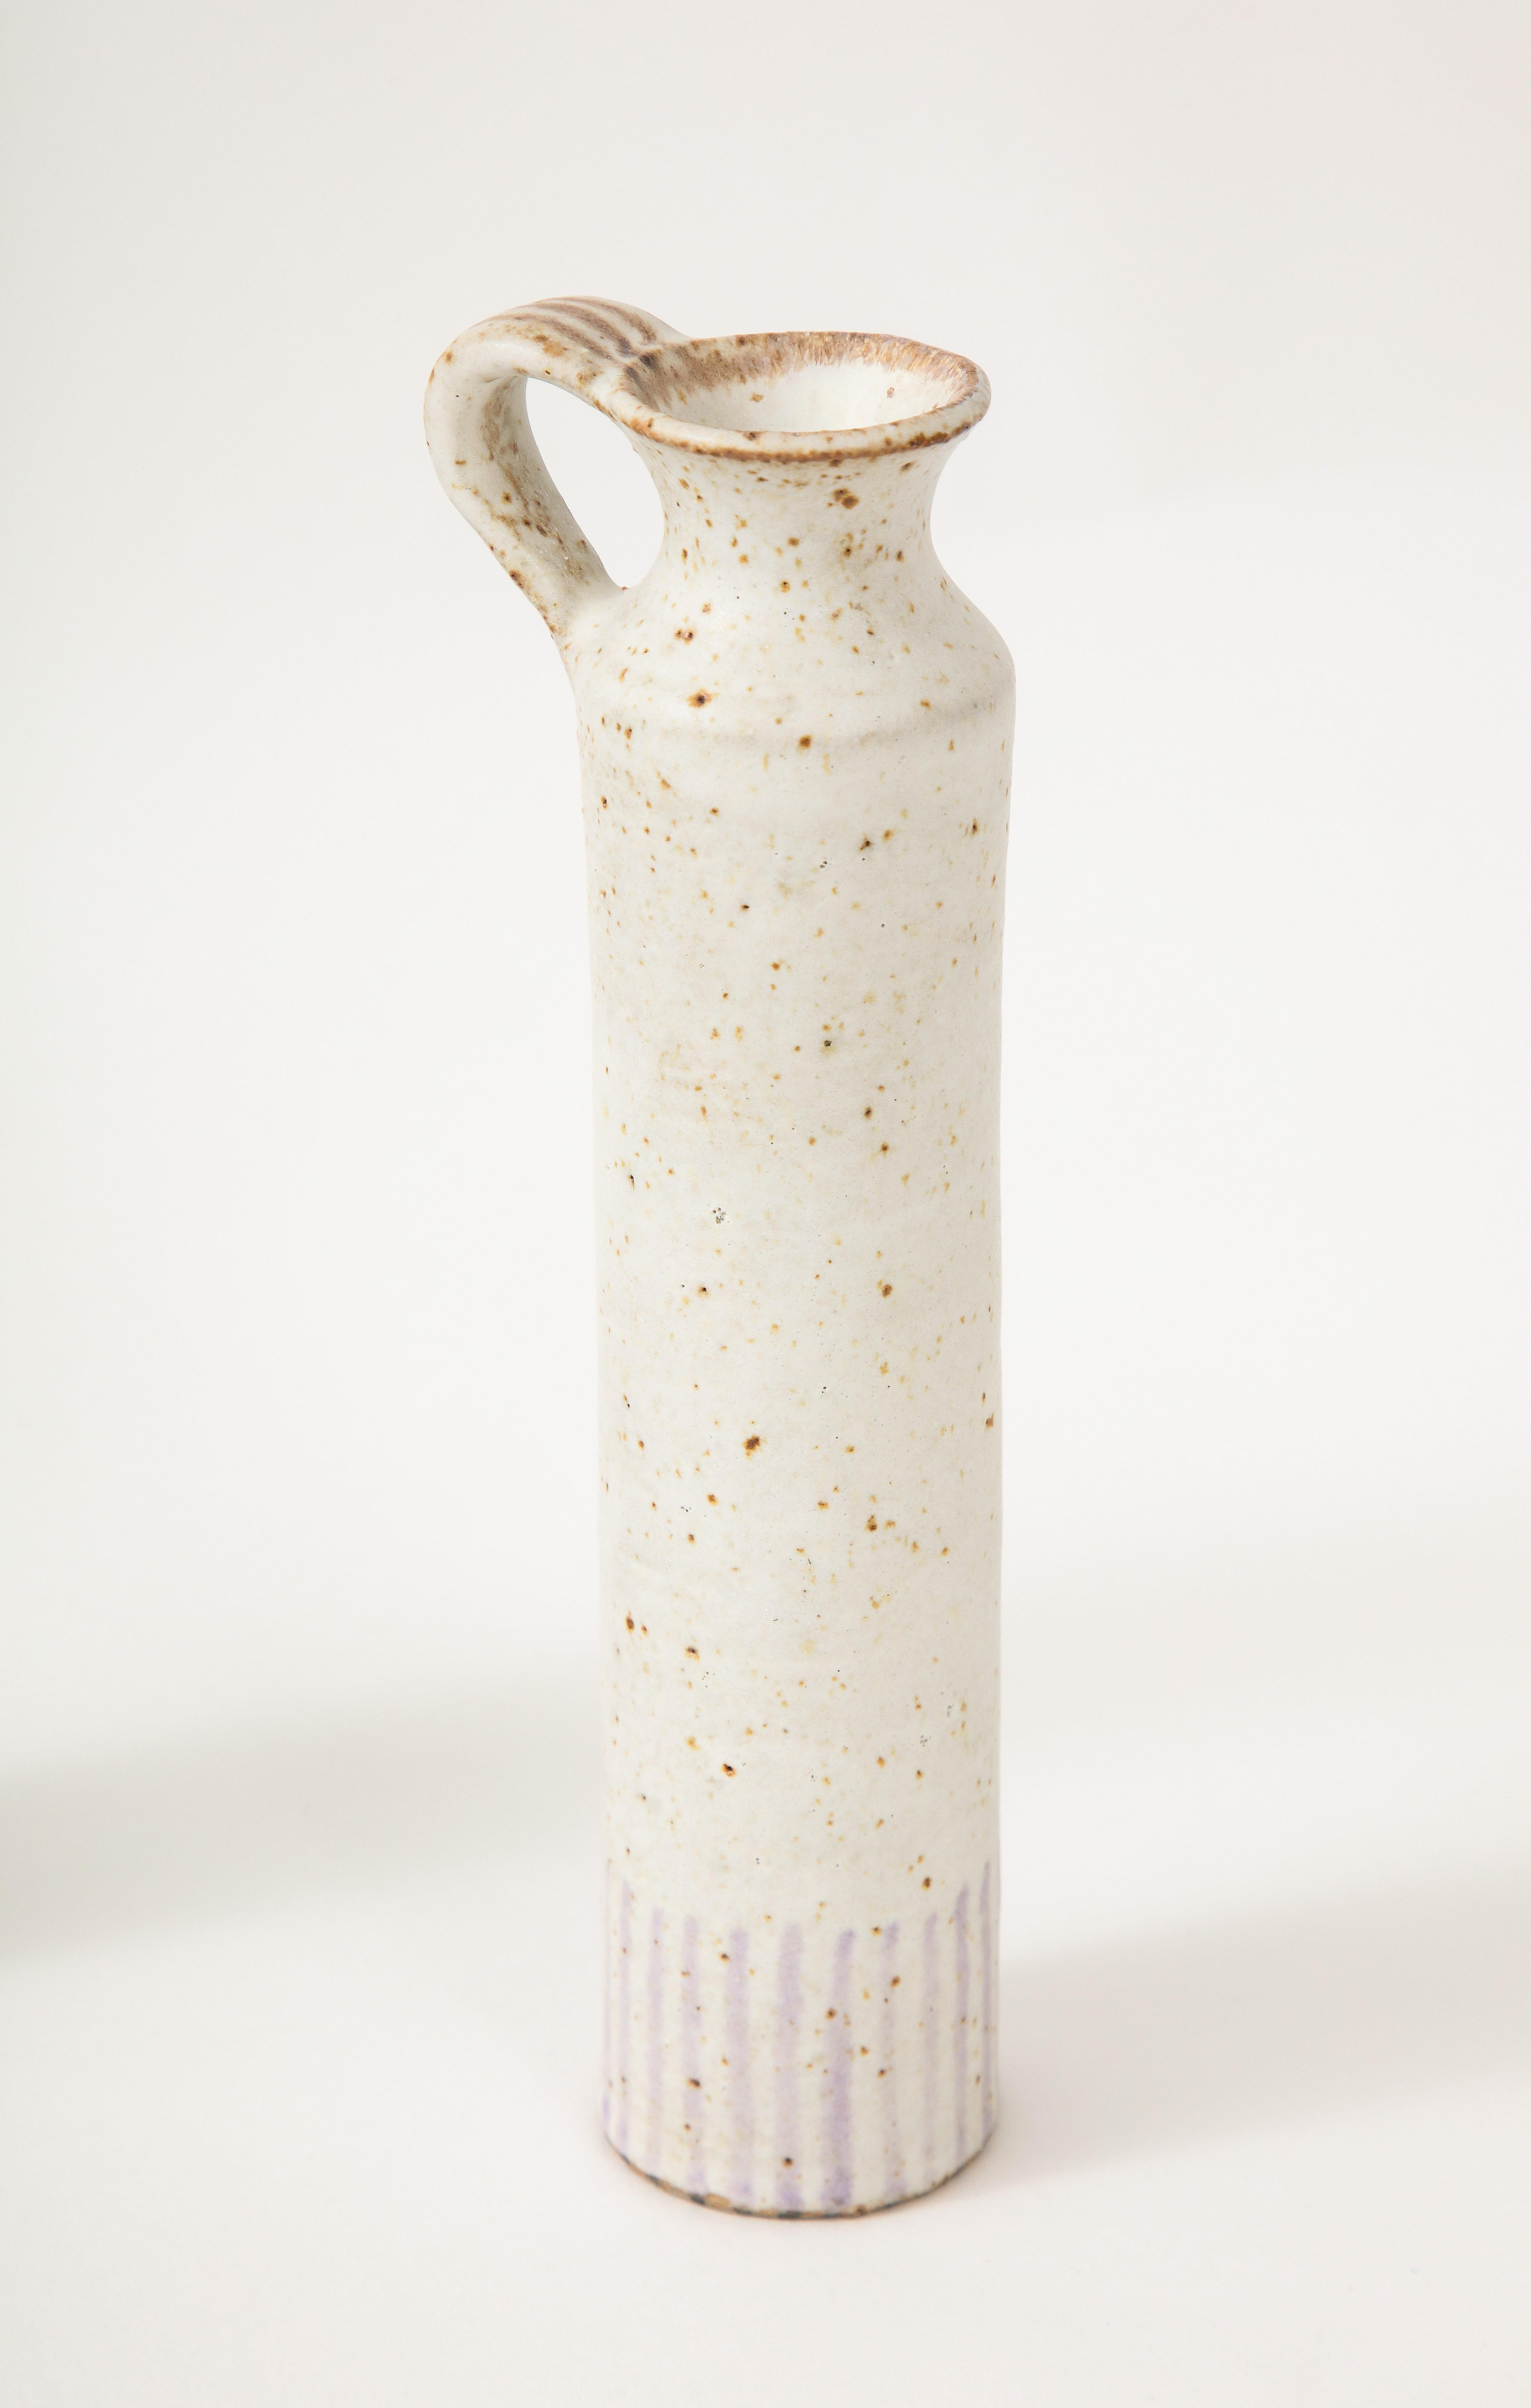 Bruno Gambone Set of Three Small Ceramic or Stoneware Vases, Italy, 1970s For Sale 1